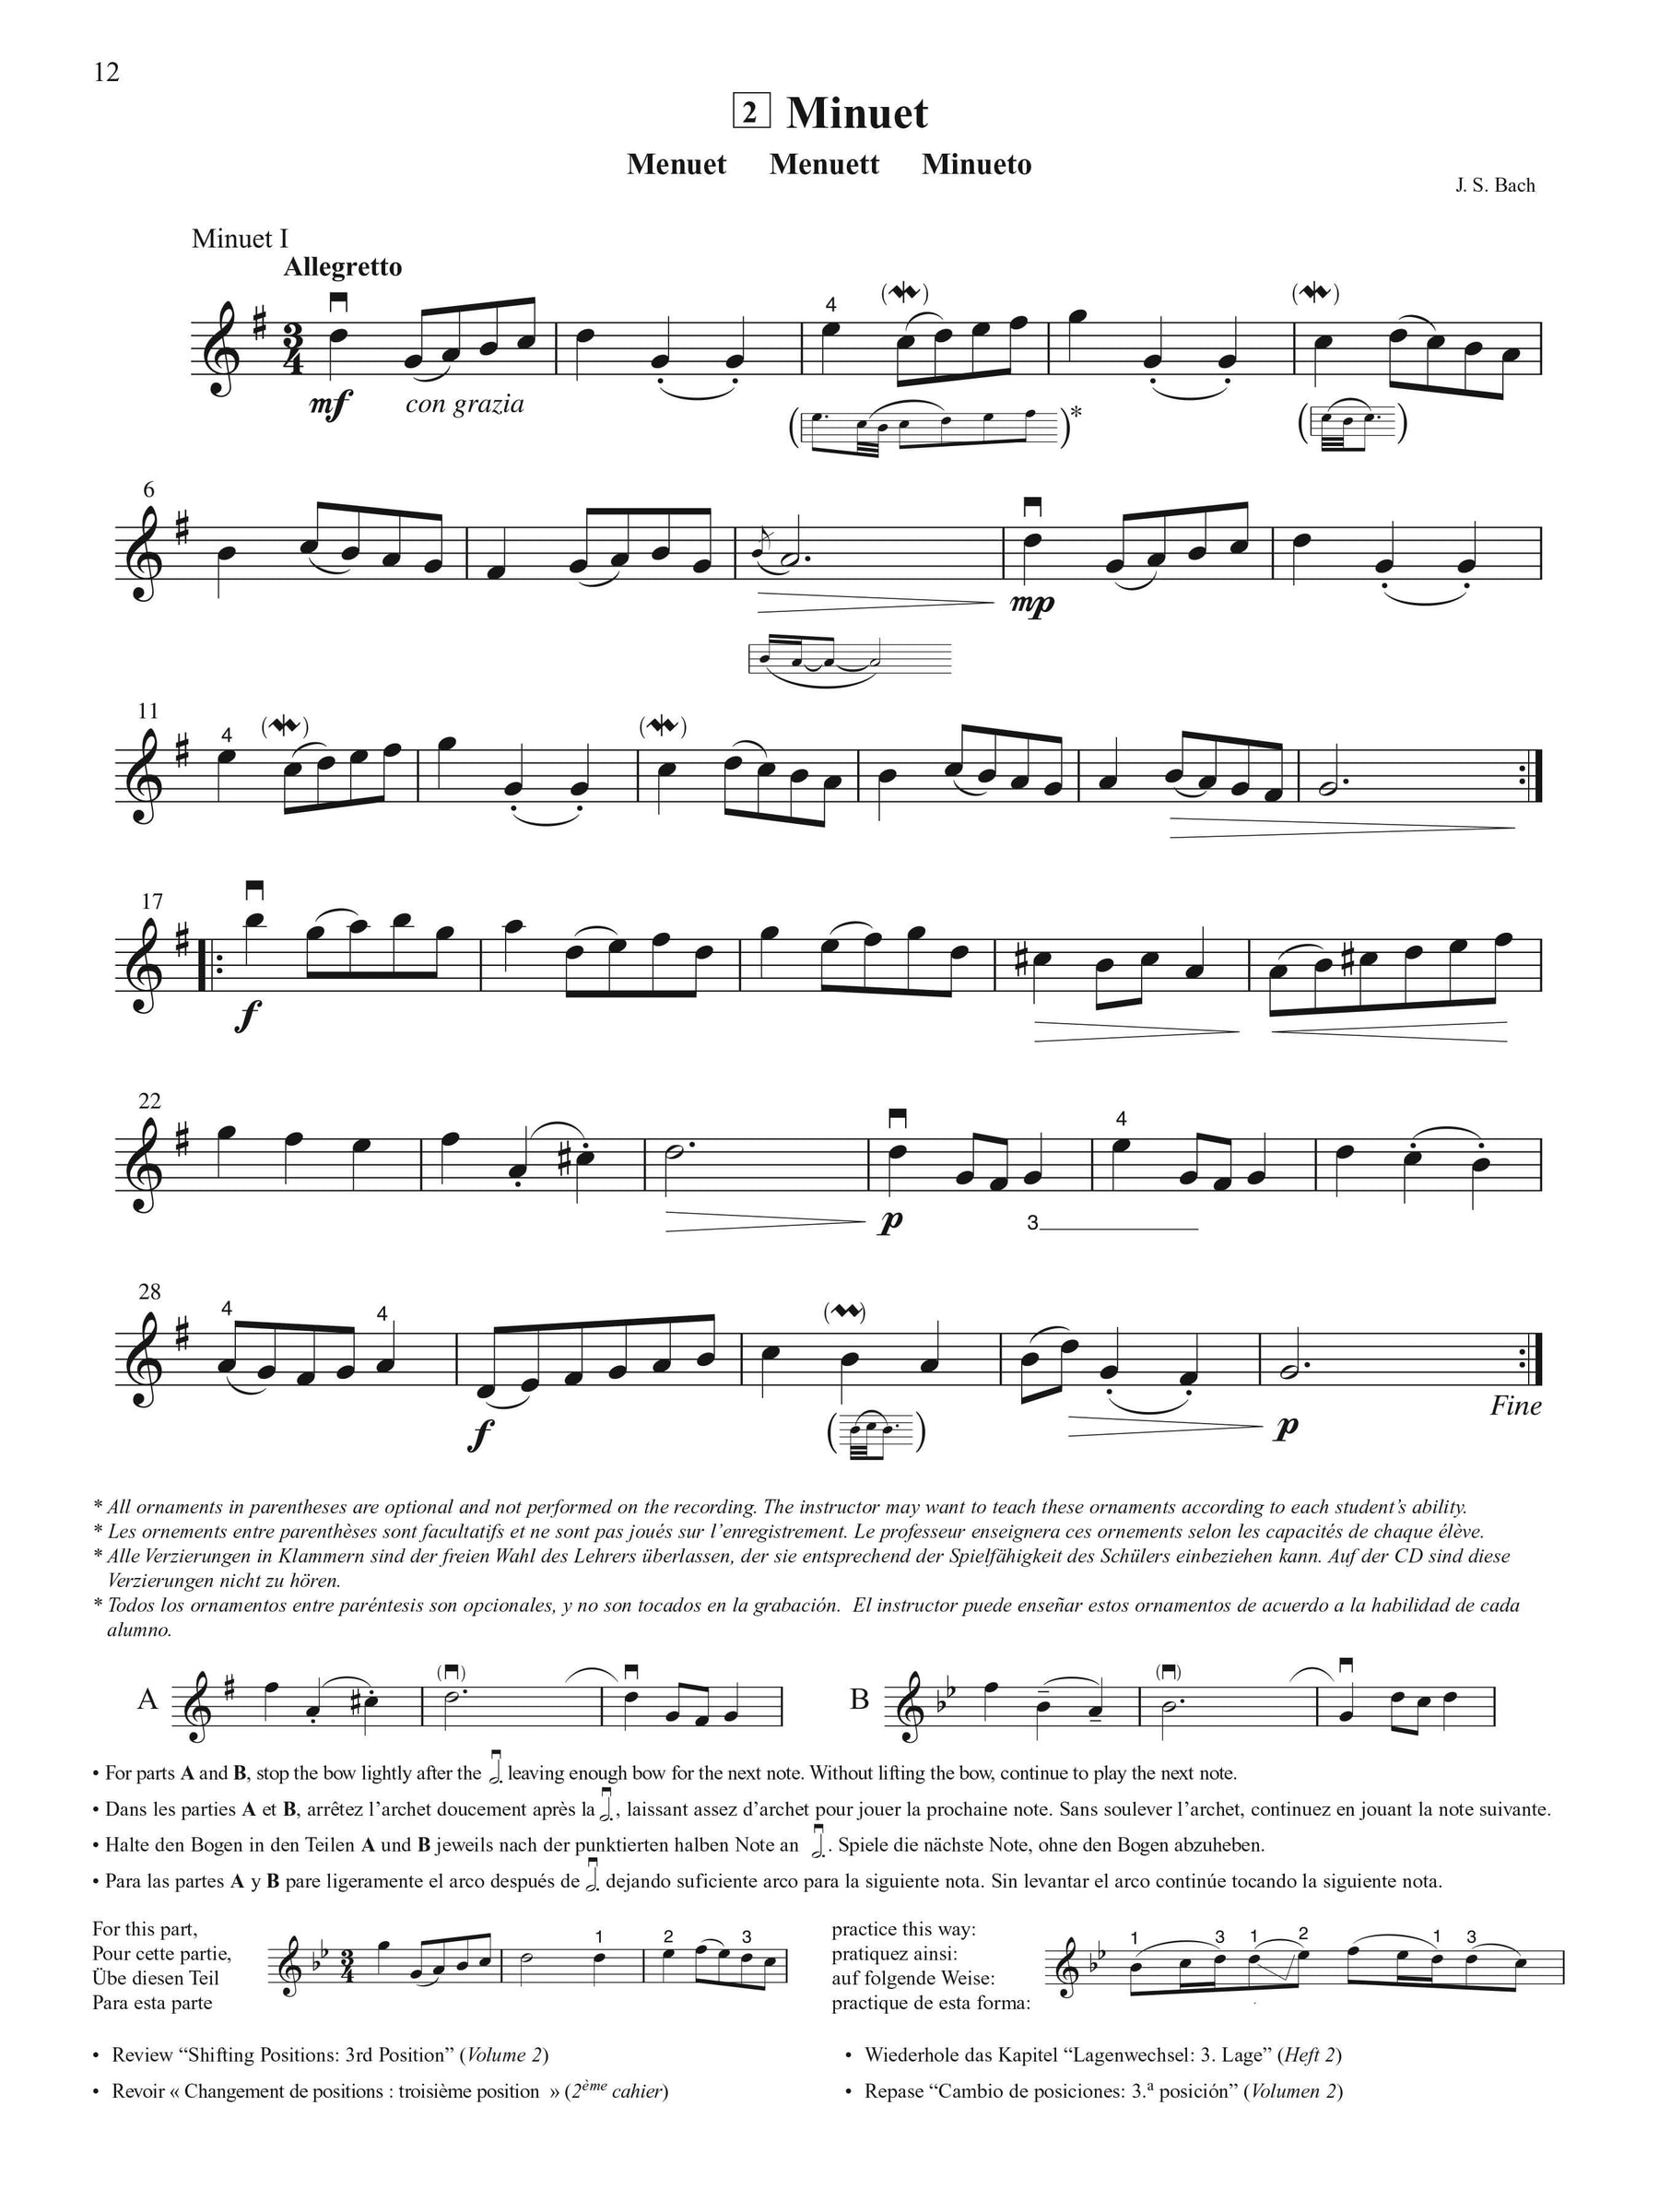 Suzuki Violin School Method Book and CD, Volume 3, Performed by Hilary Hahn